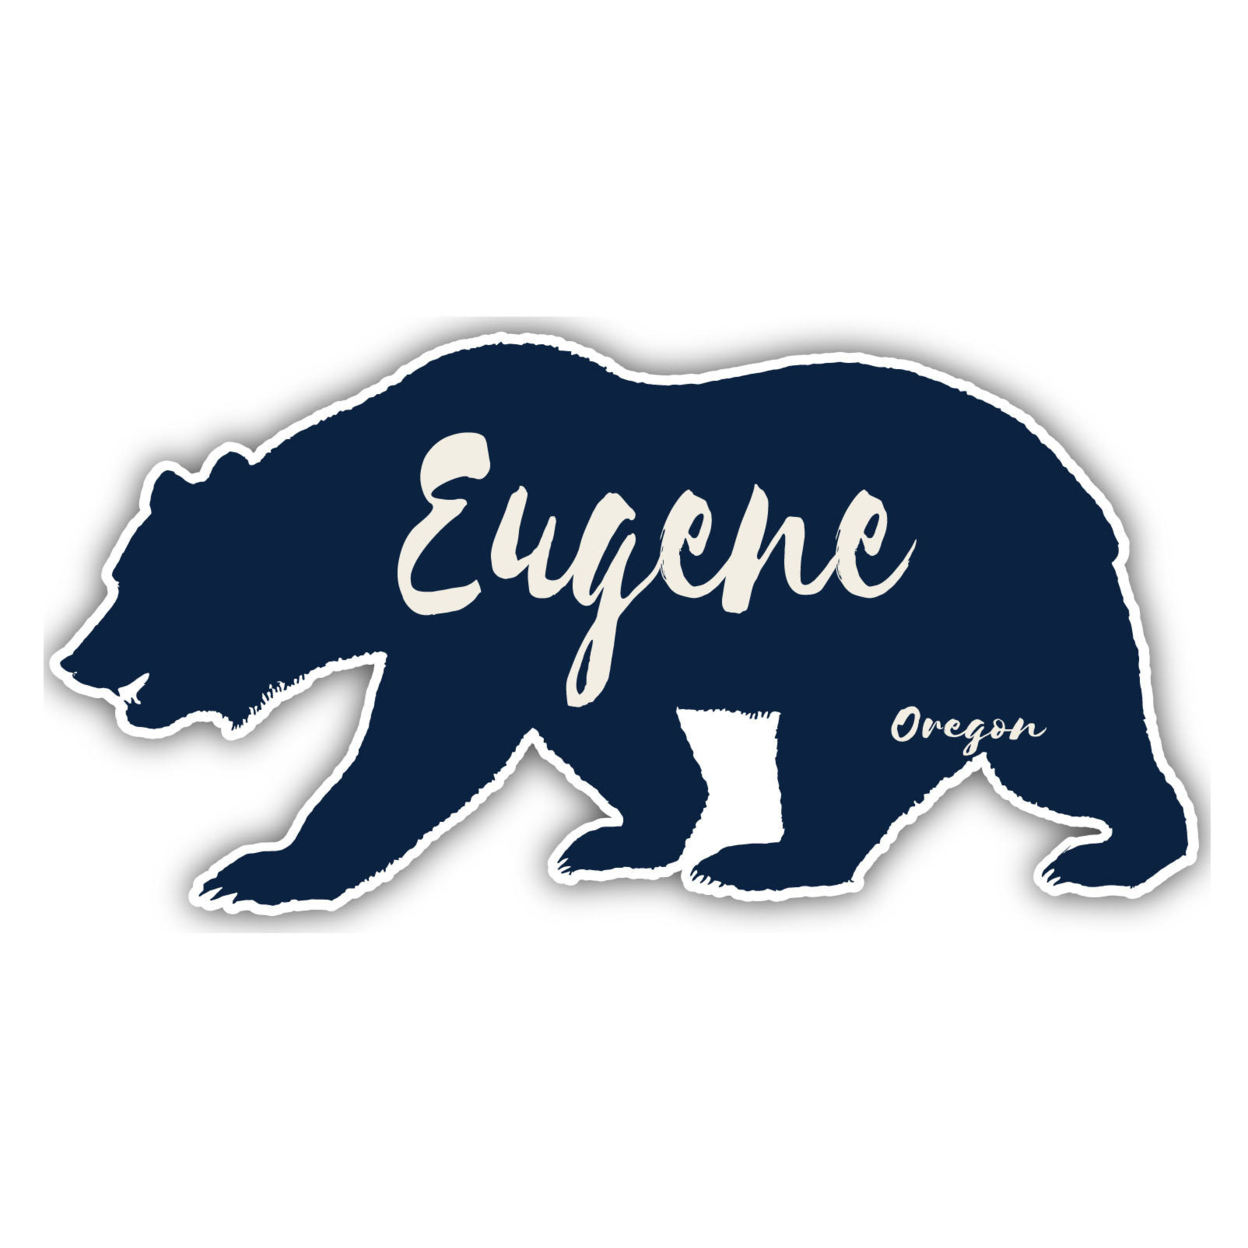 Eugene Oregon Souvenir Decorative Stickers (Choose Theme And Size) - Single Unit, 8-Inch, Bear